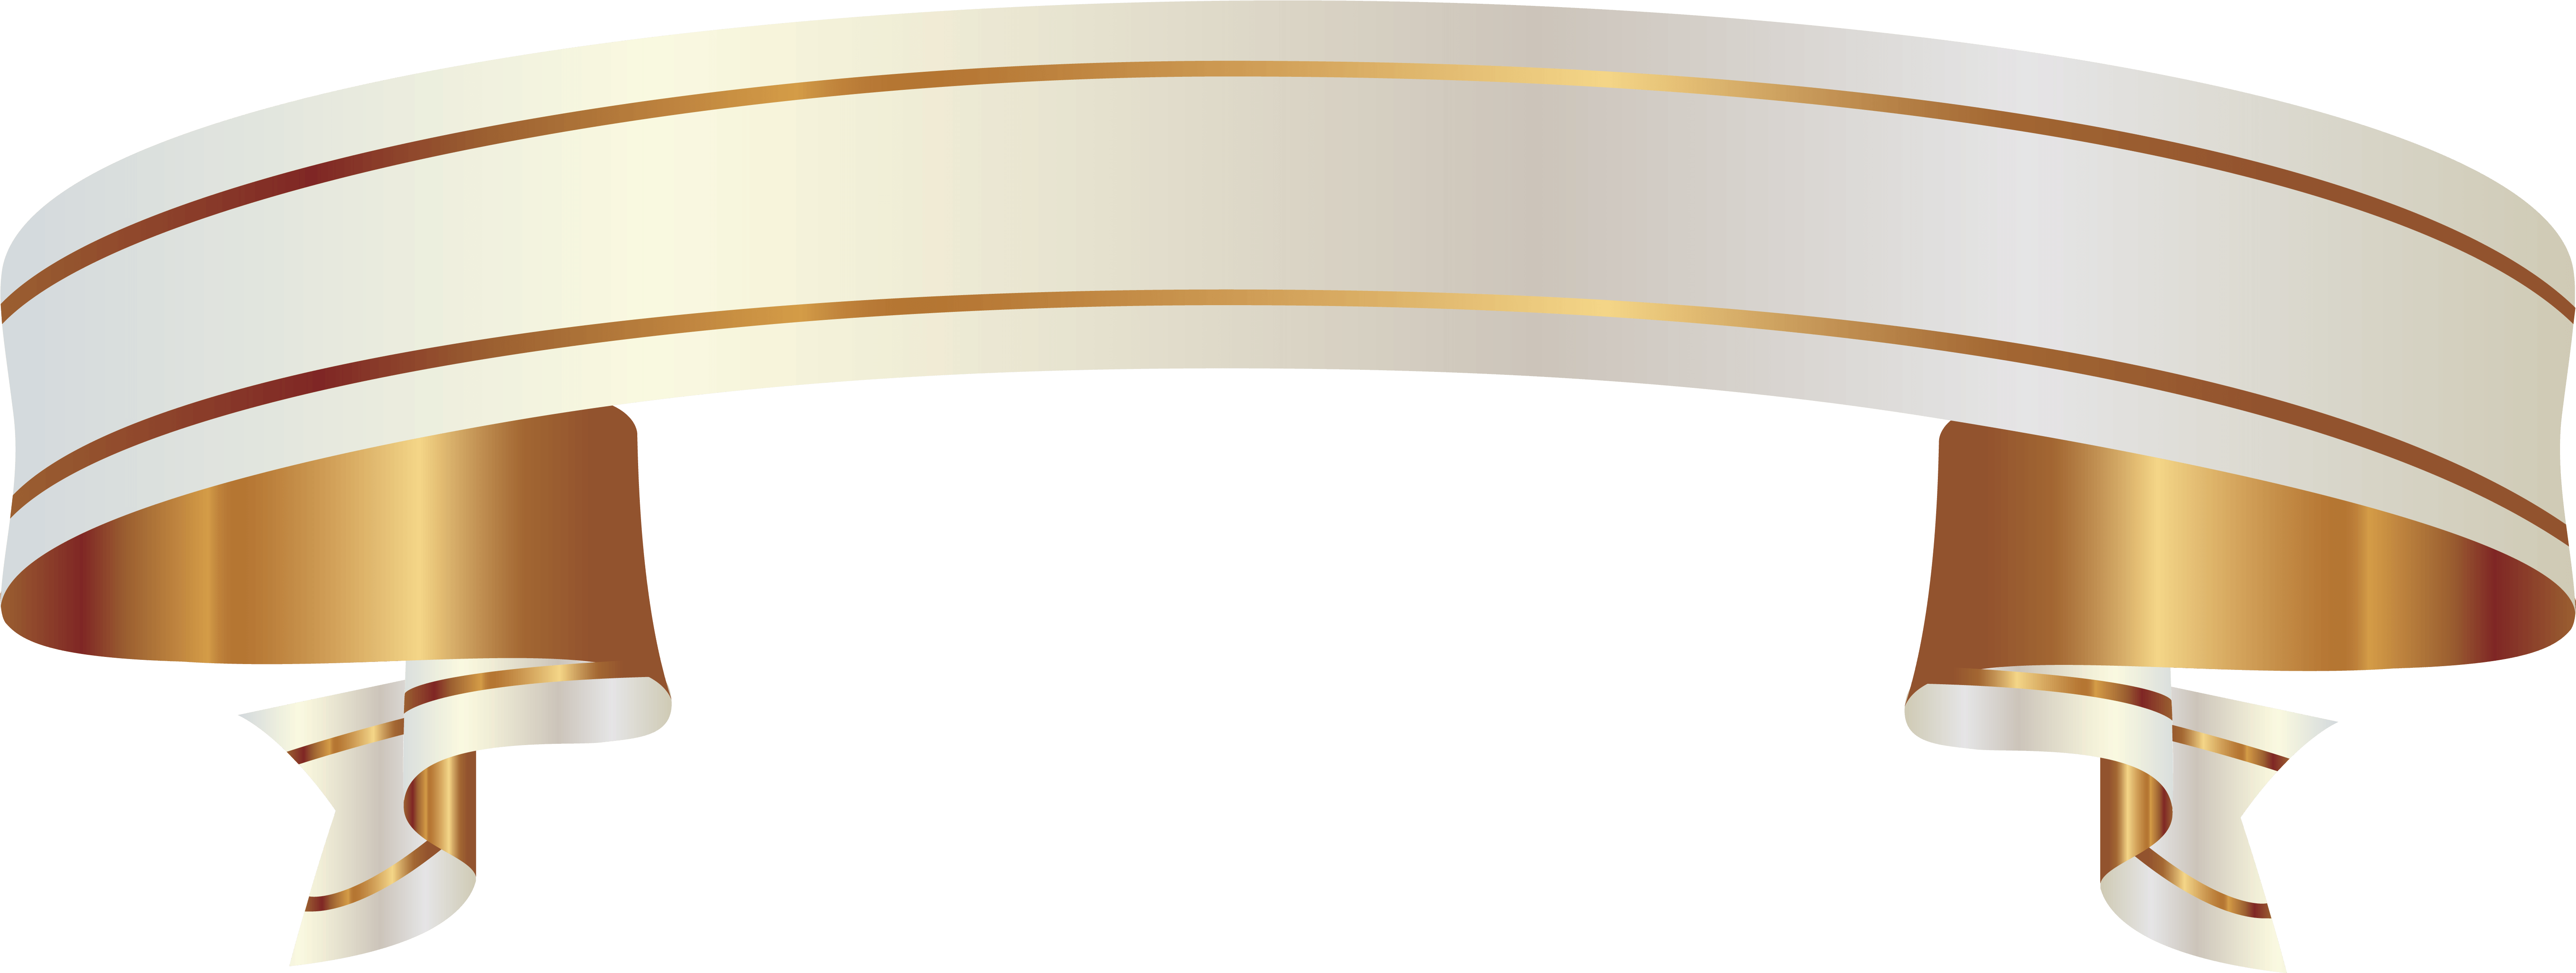 banner-gold-white-label-and-gold-banner-gold-ribbon-logo-clip-art